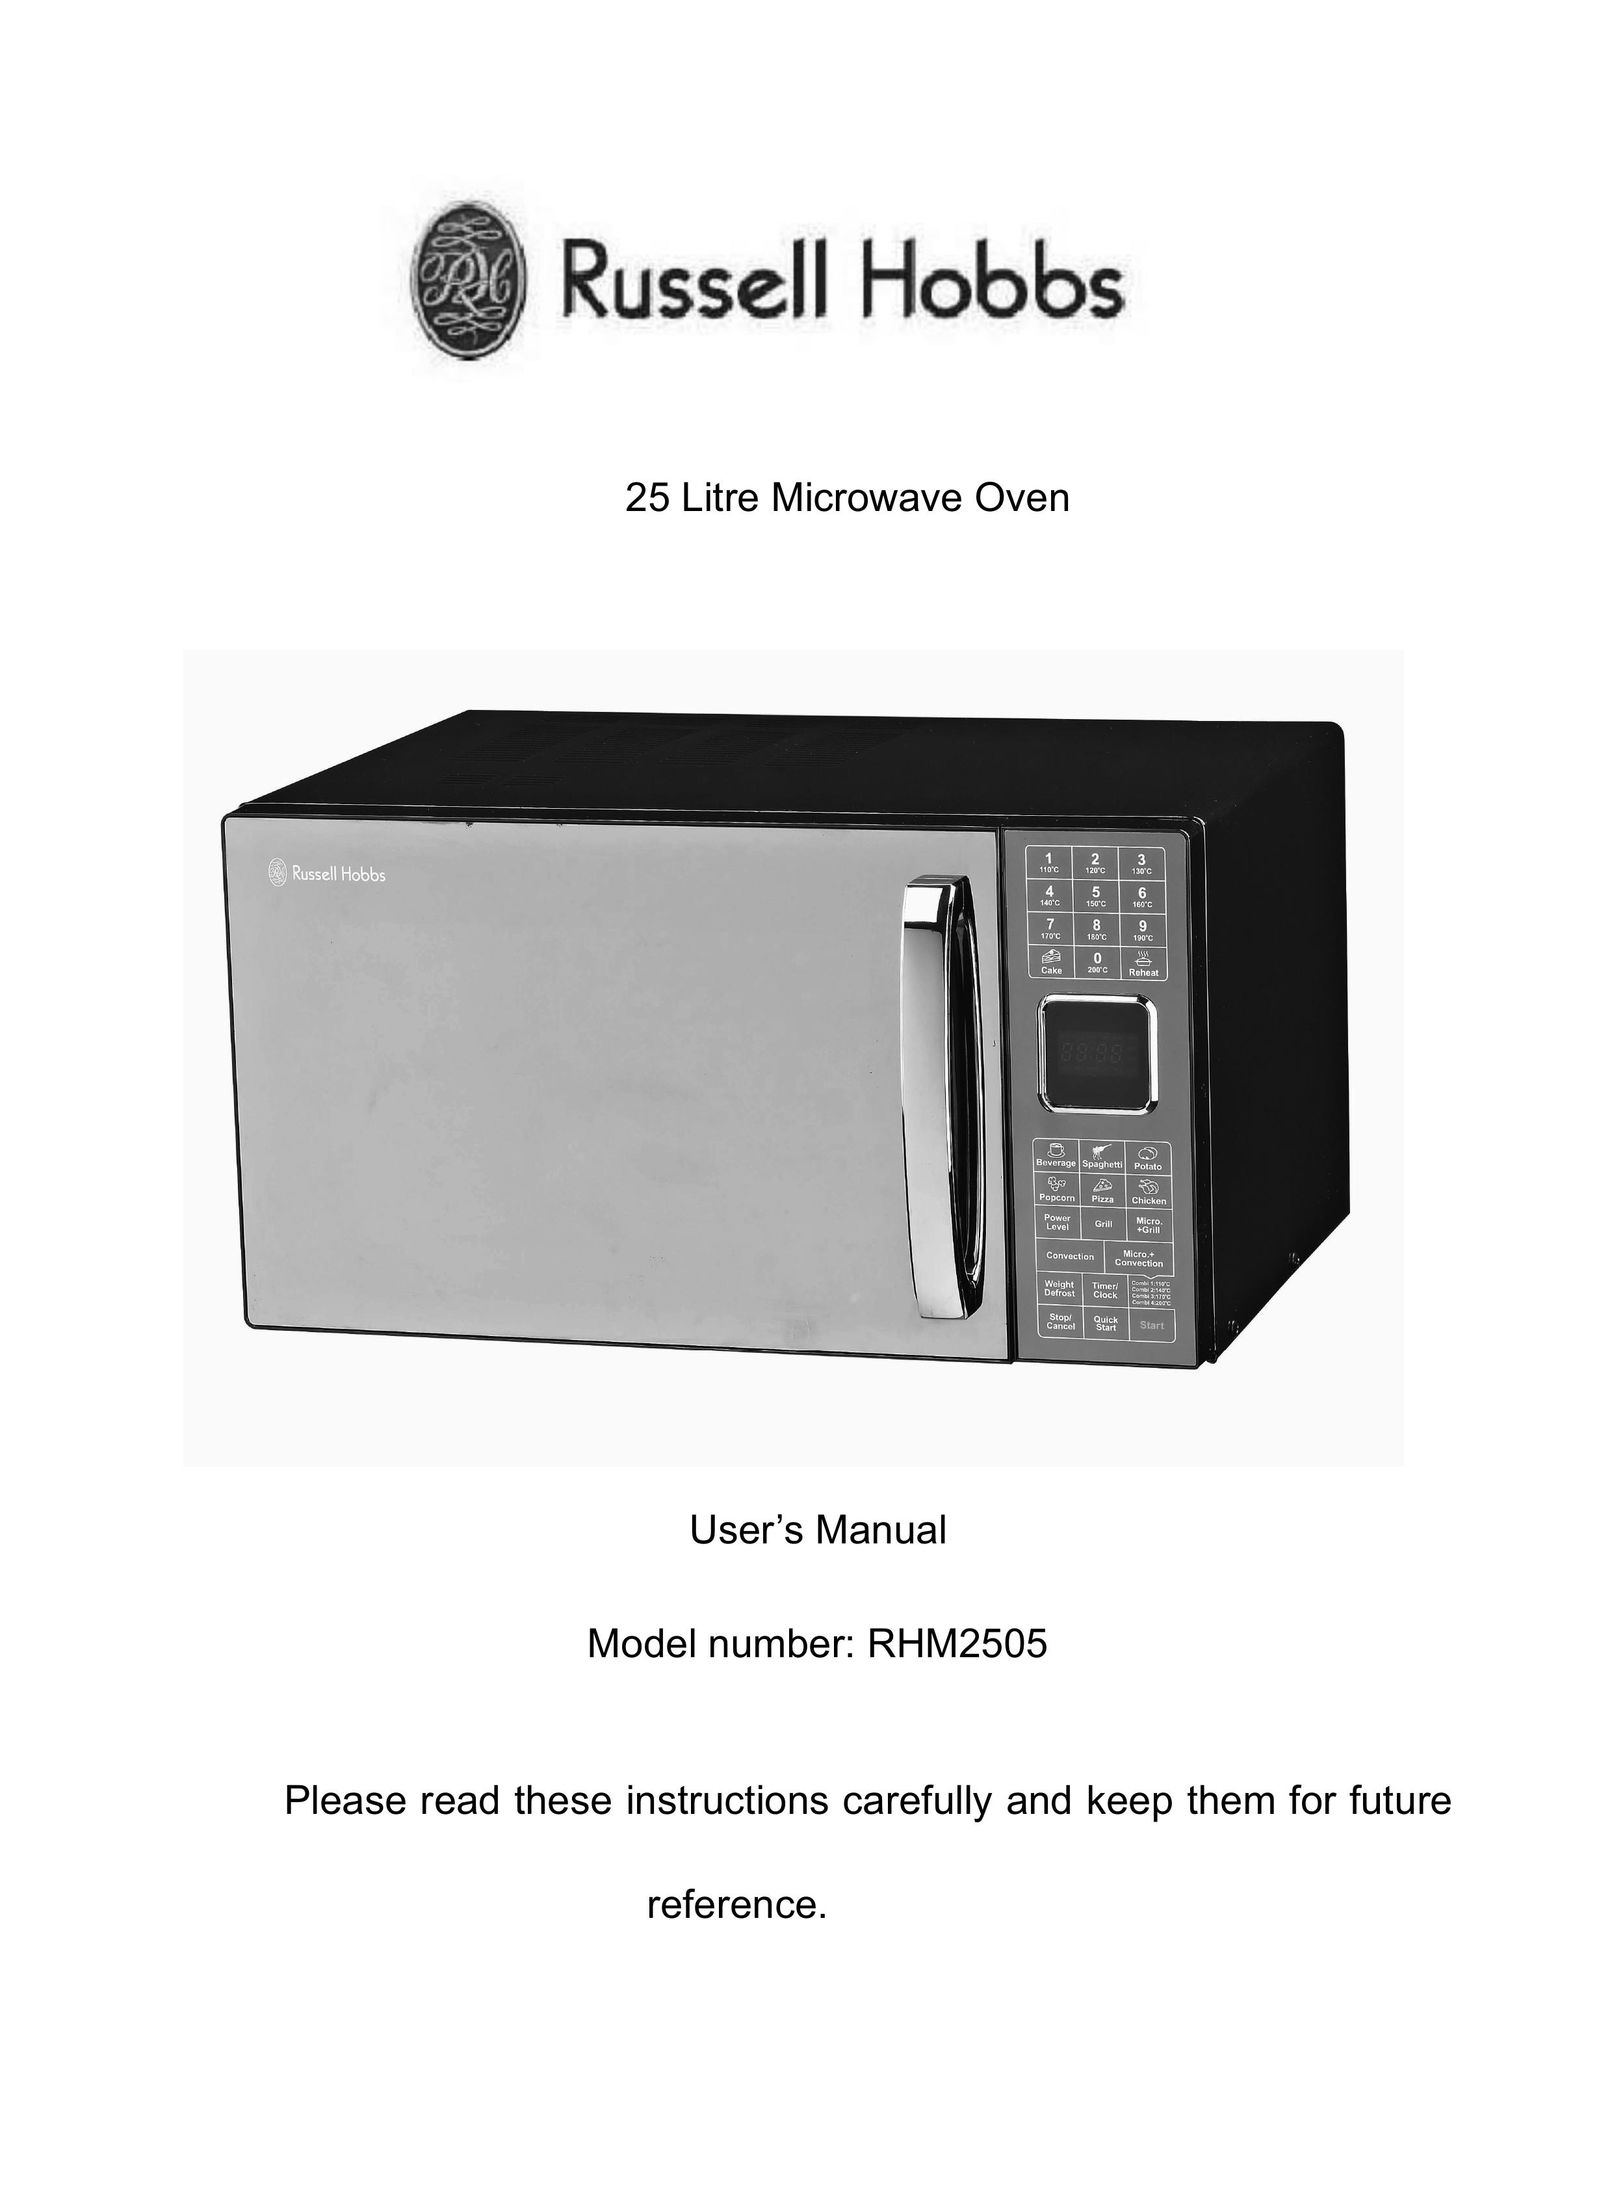 Russell Hobbs RHM2505 Microwave Oven User Manual